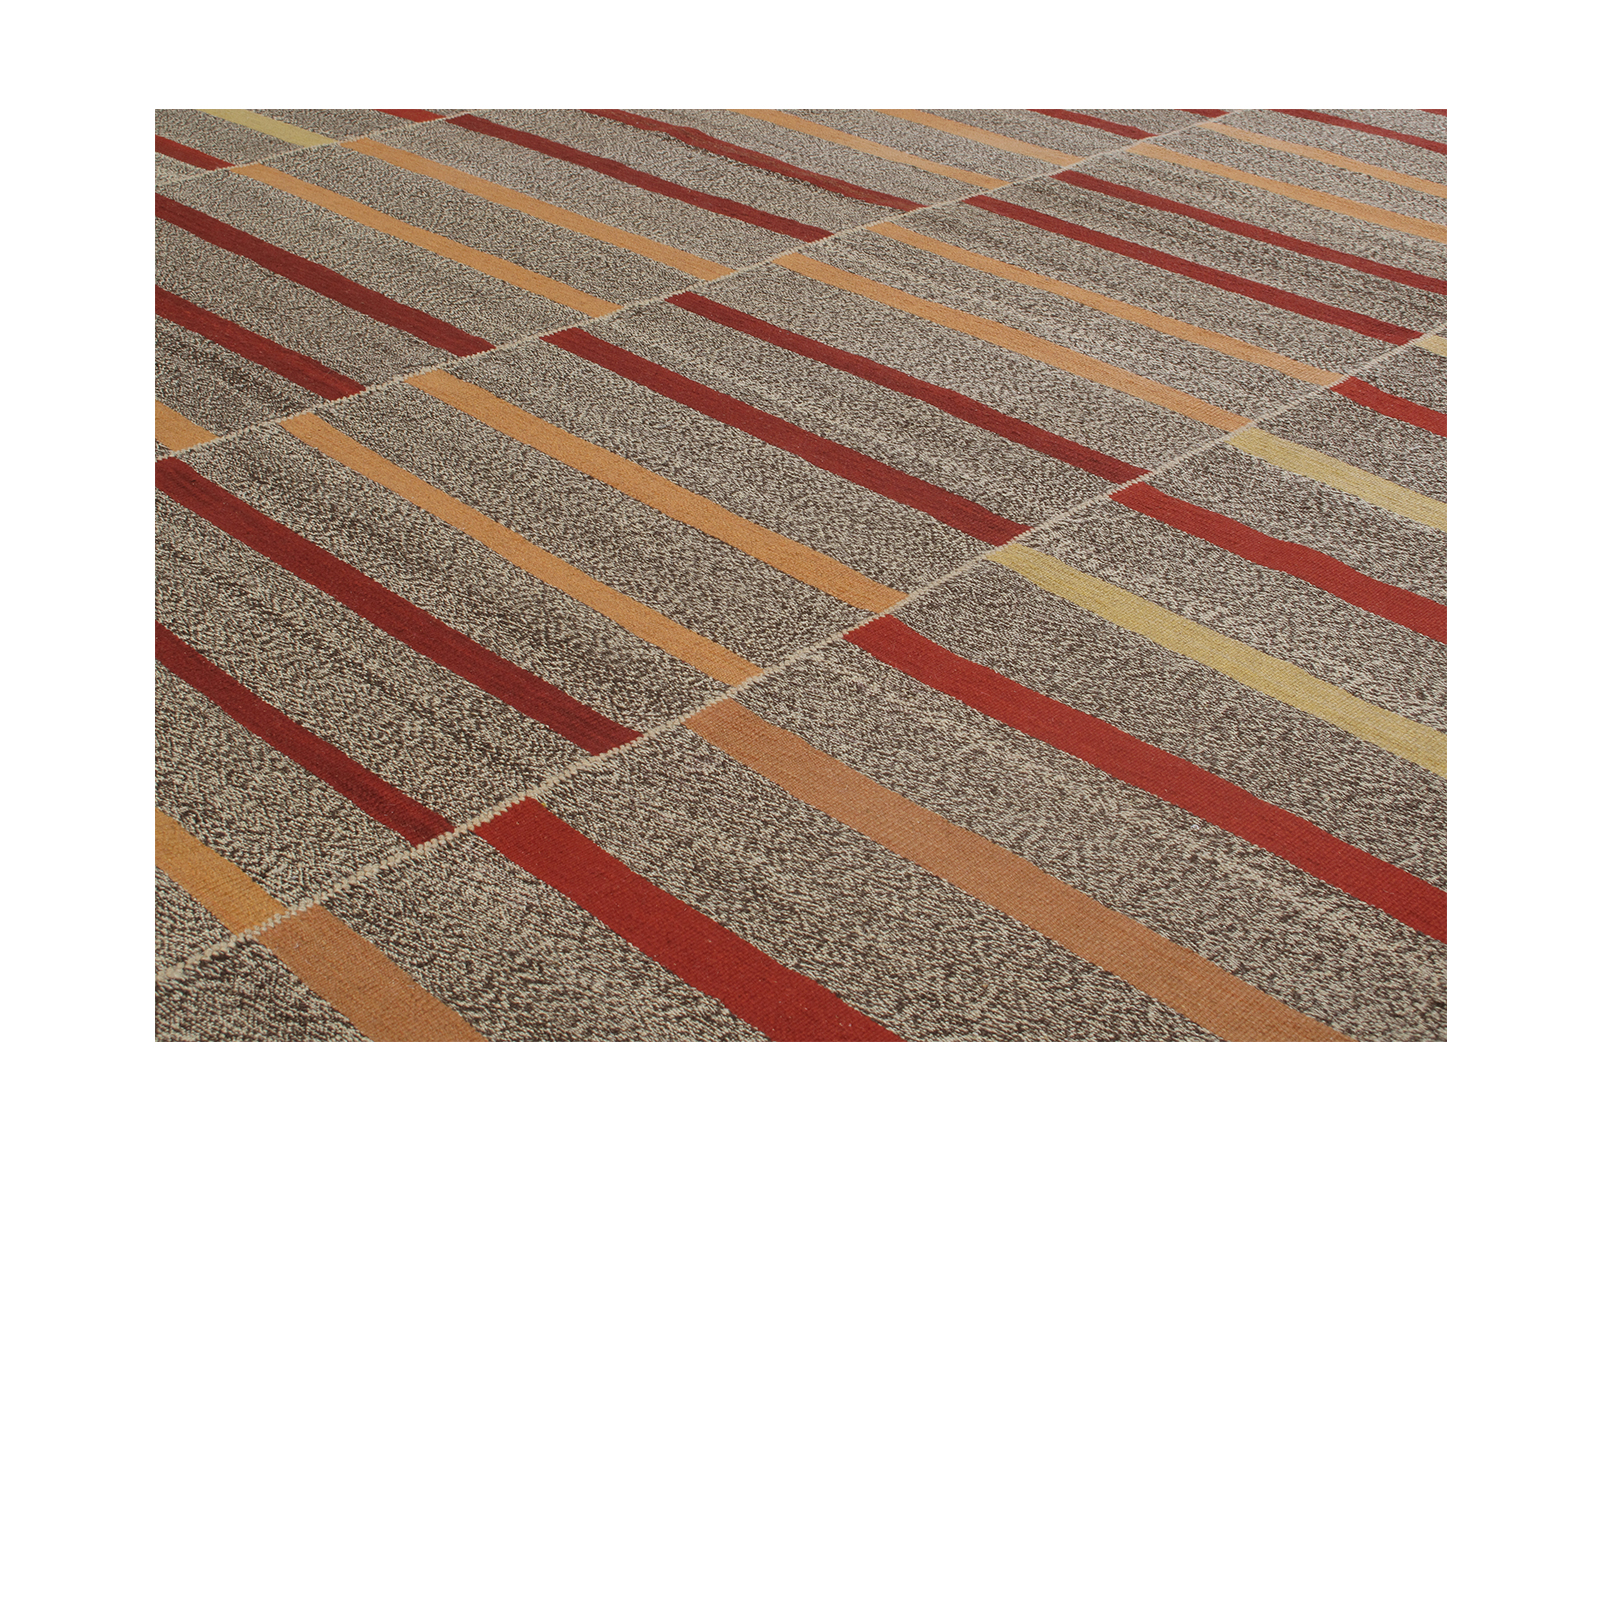 This Mazandaran rug is handwoven.